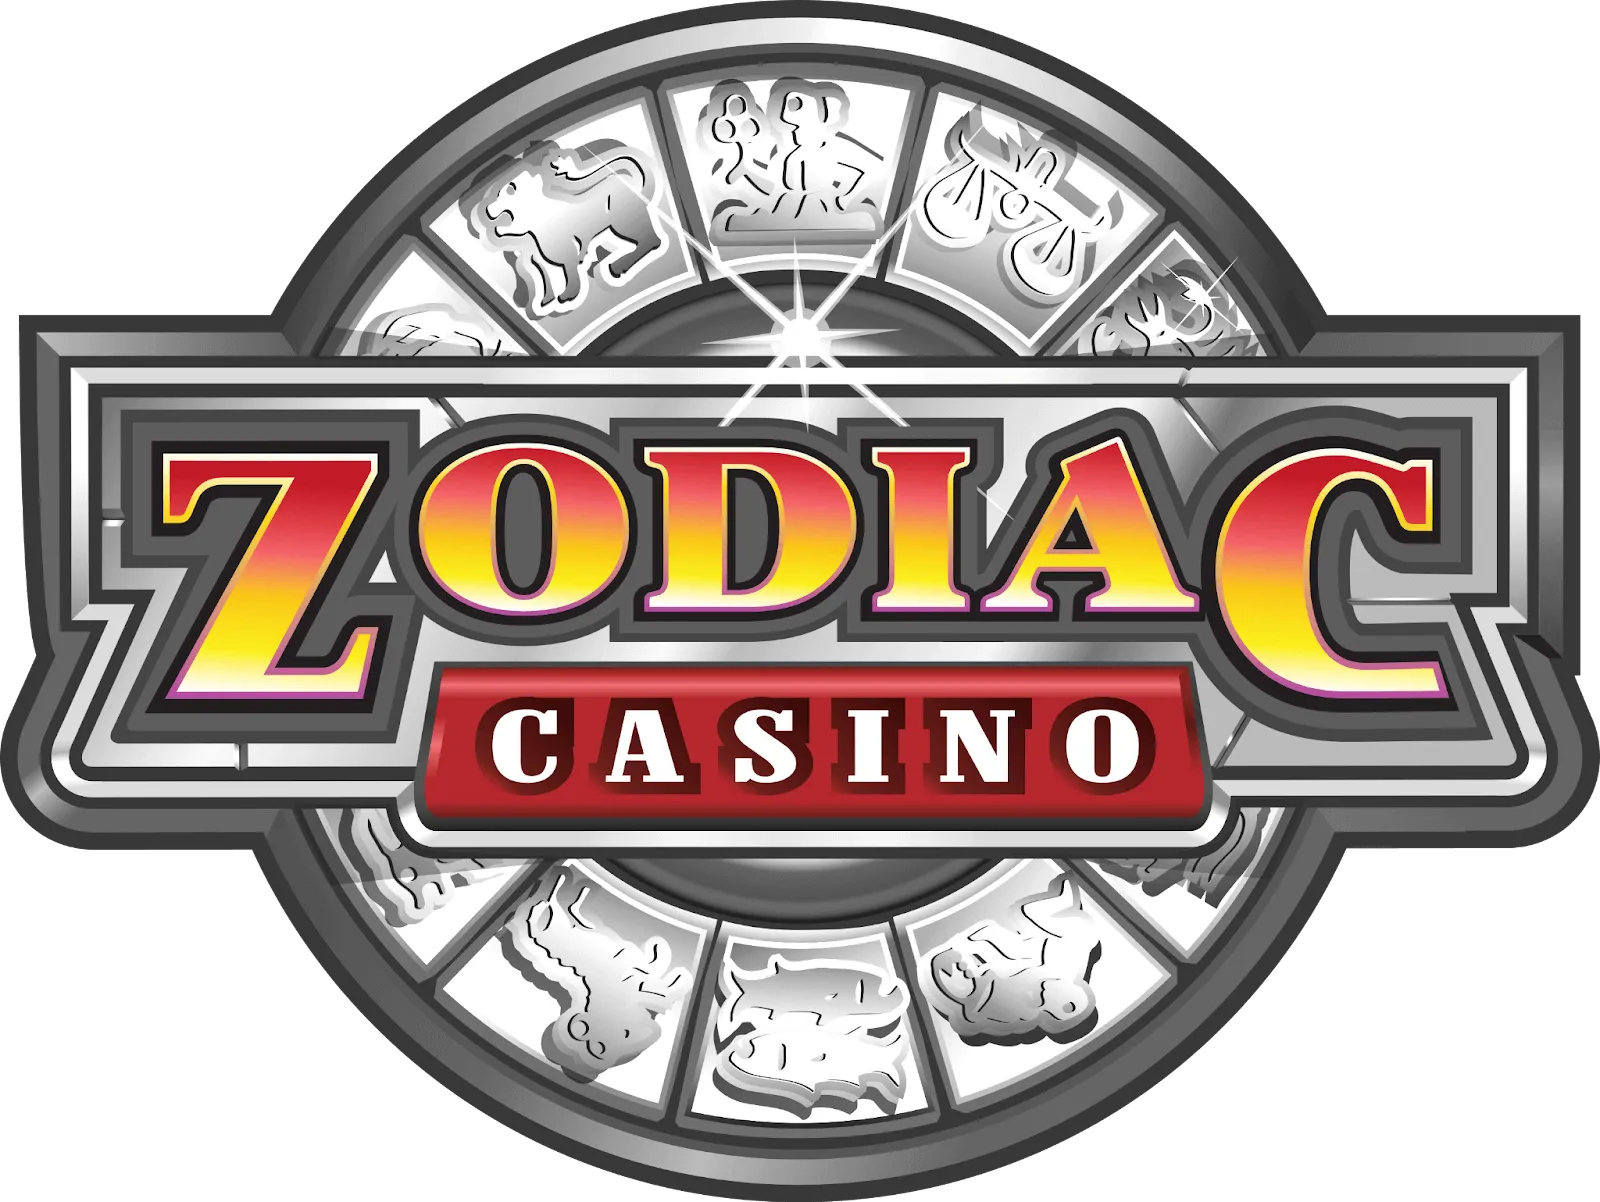 Zodiac casino company logo